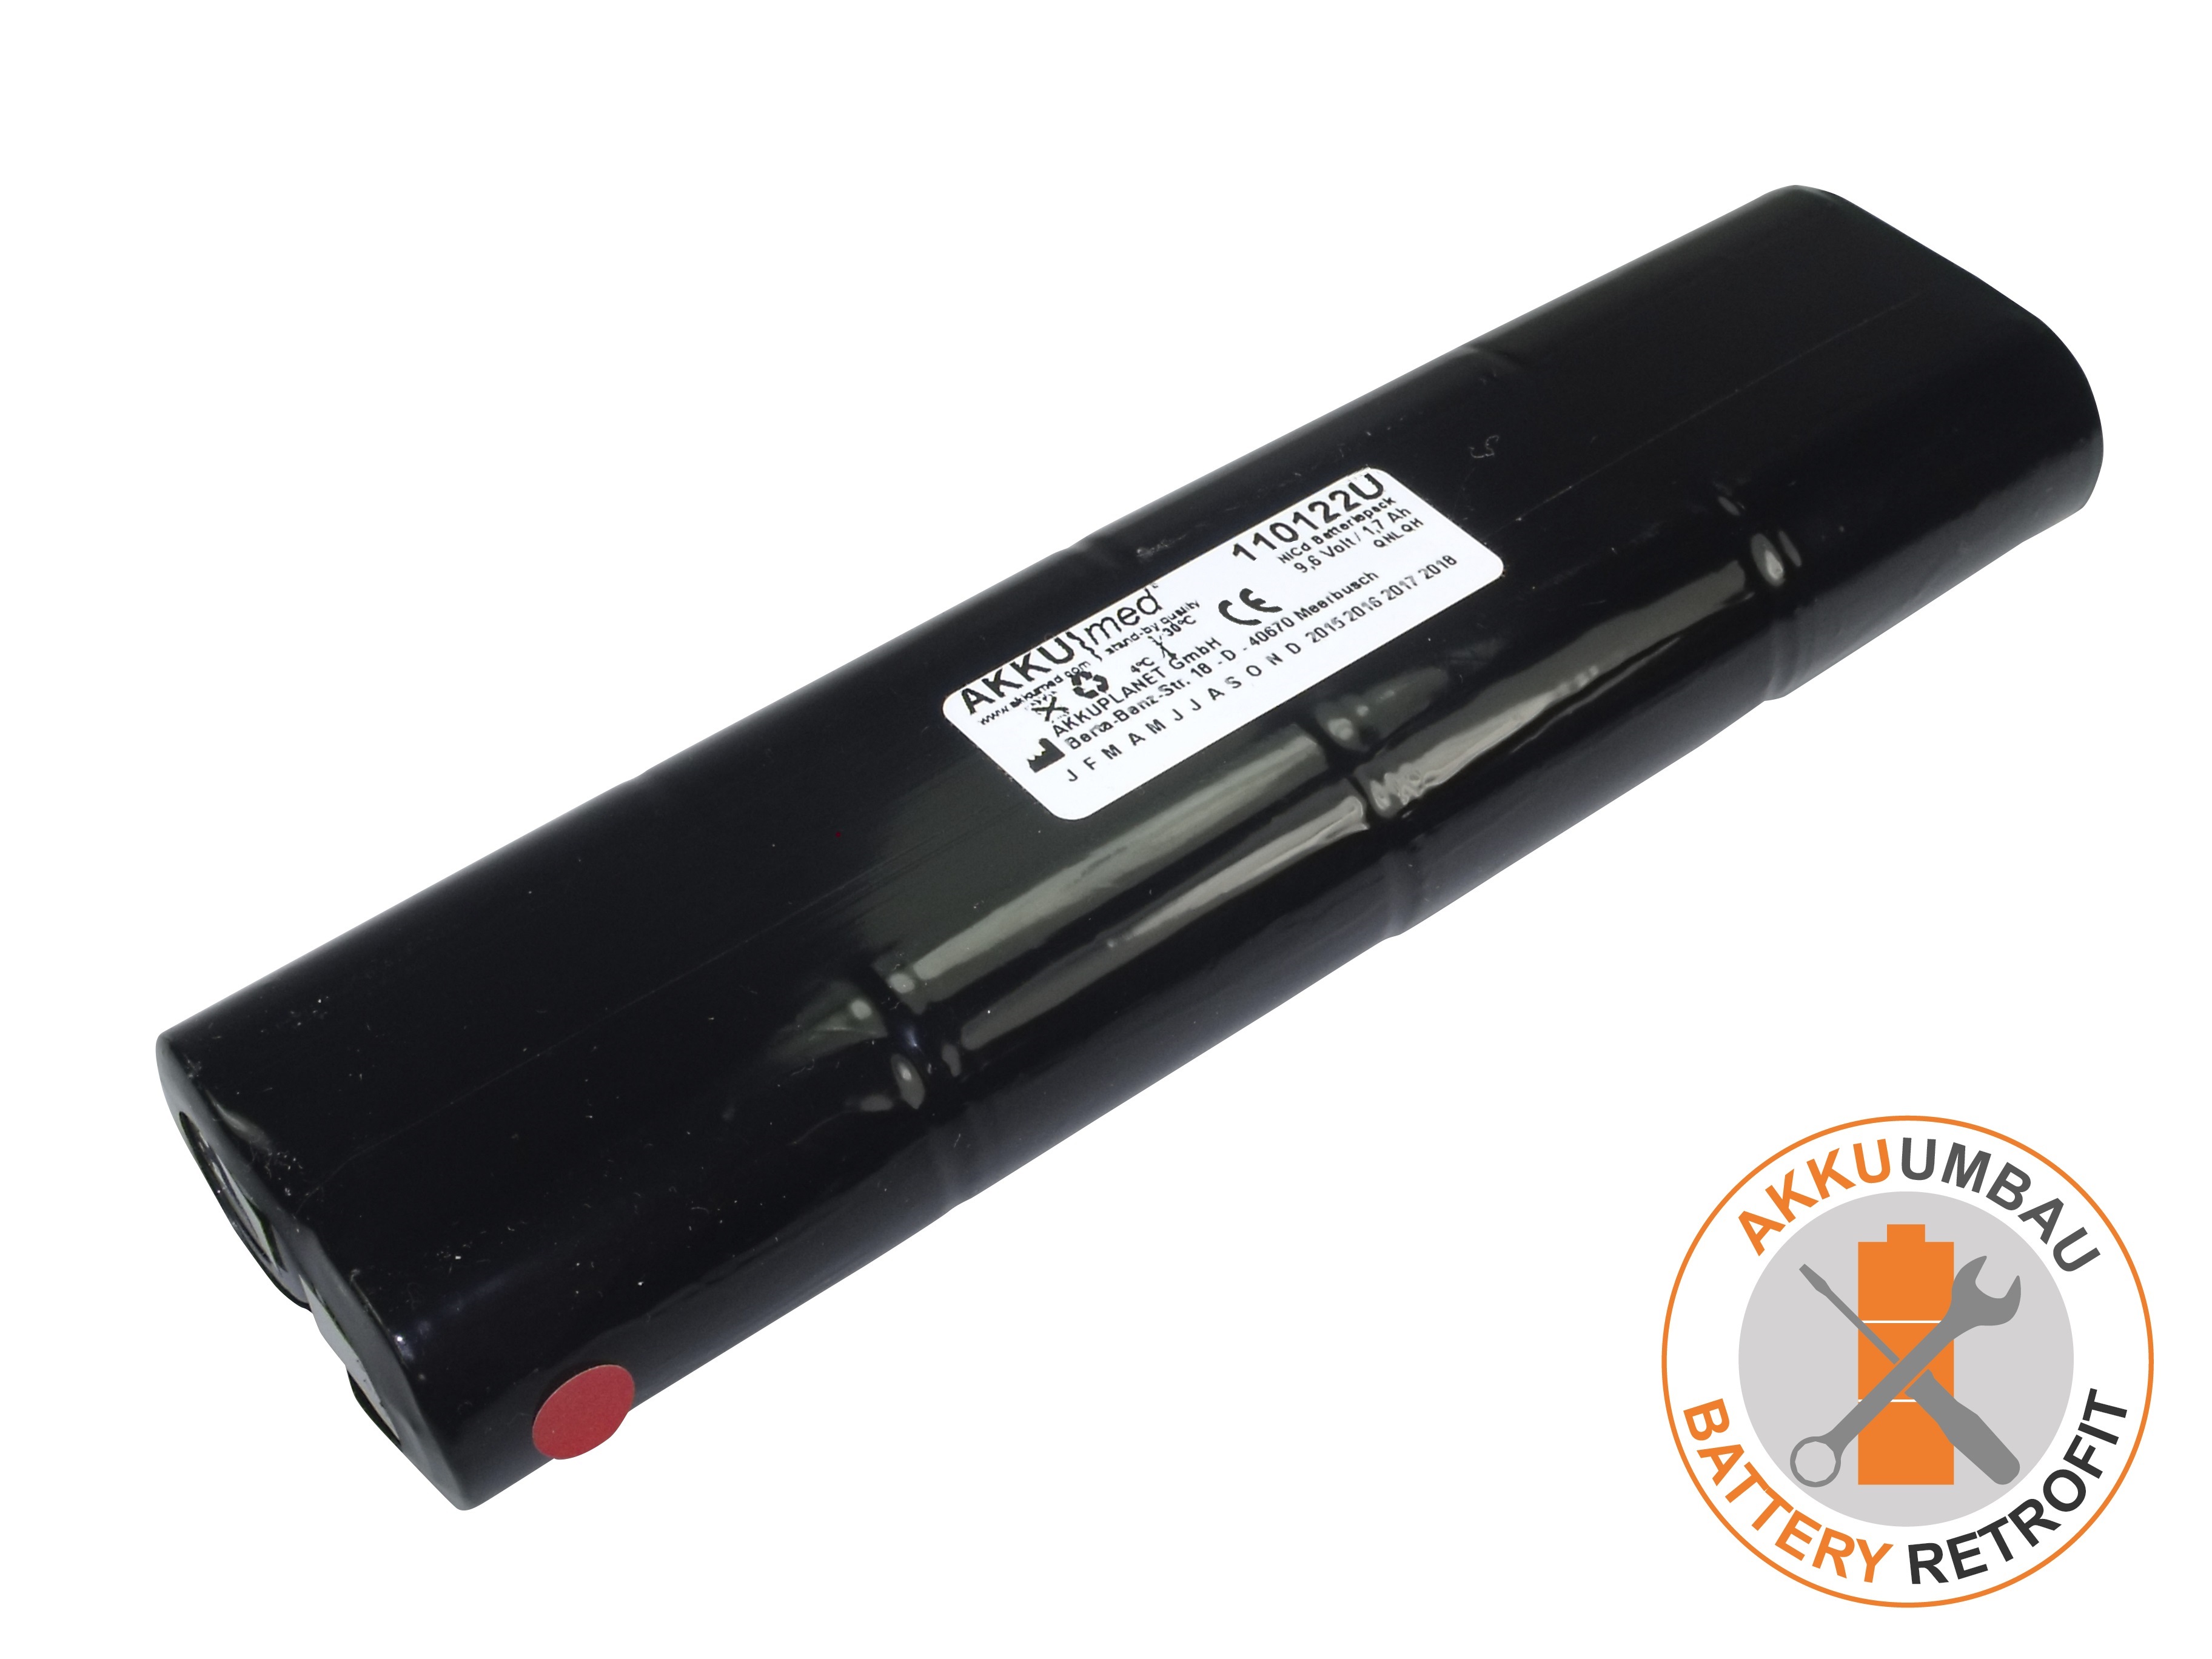 AKKUmed NC battery retrofit suitable for Dego cardiomed 3 ECG